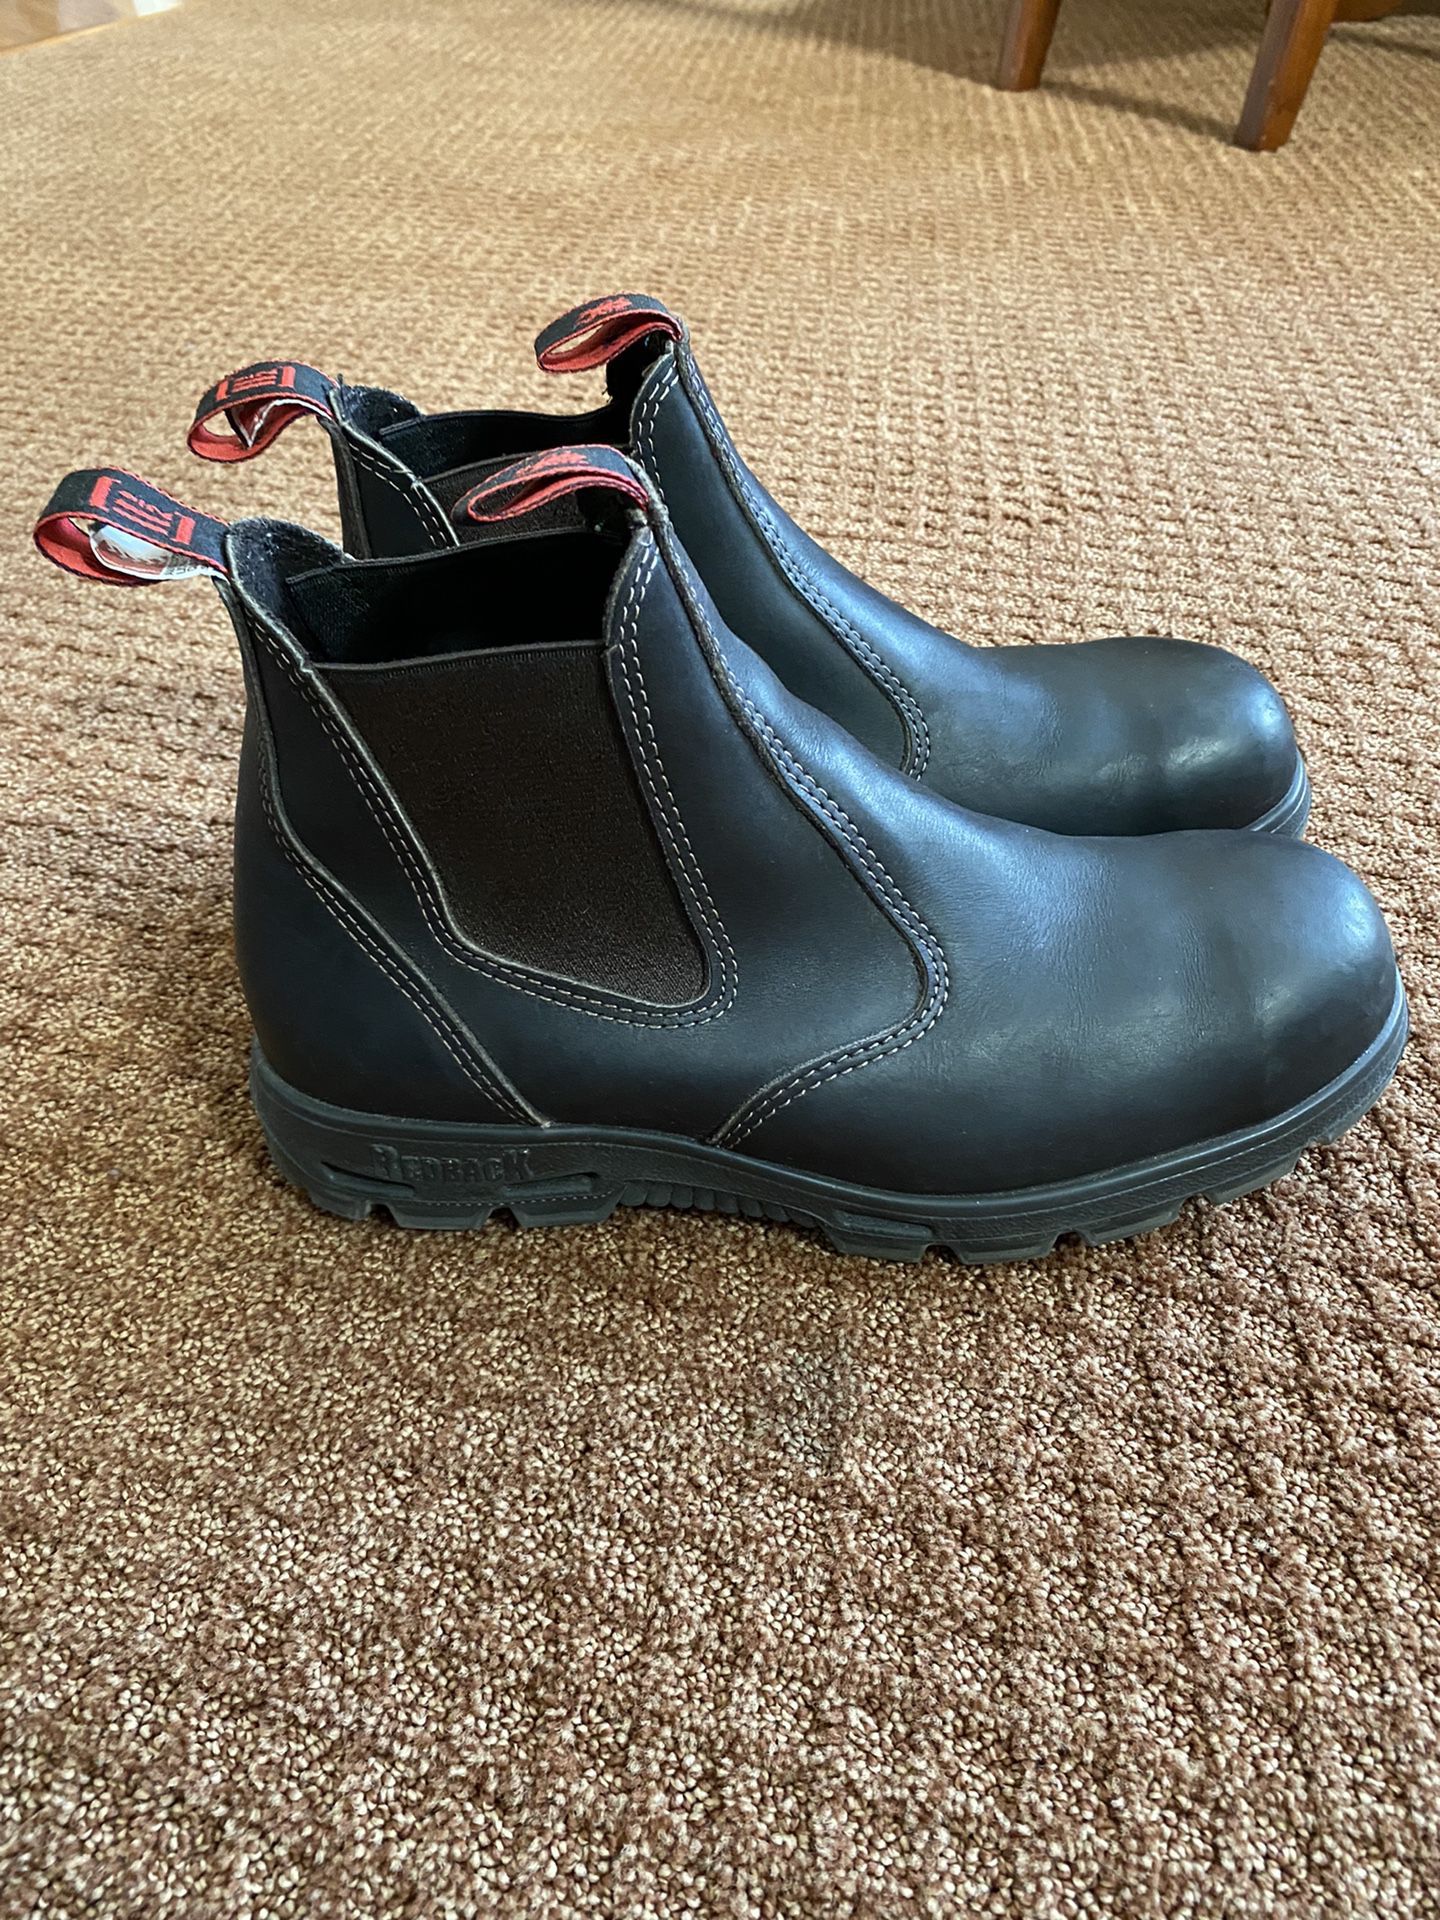 Mens Redback Composite Toe Slip-on Work Boots 